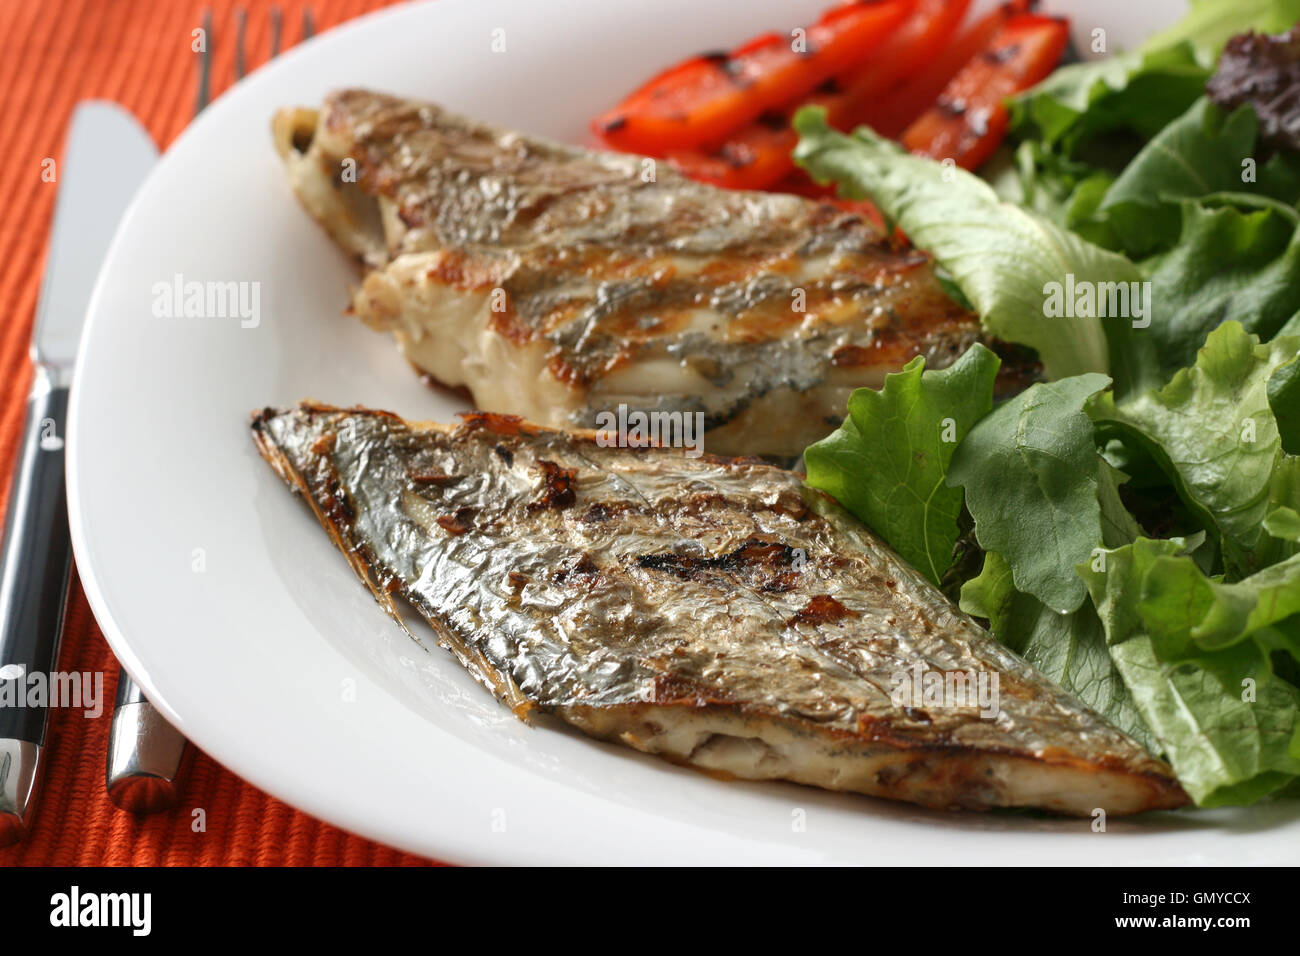 fried swordfish with salad Stock Photo